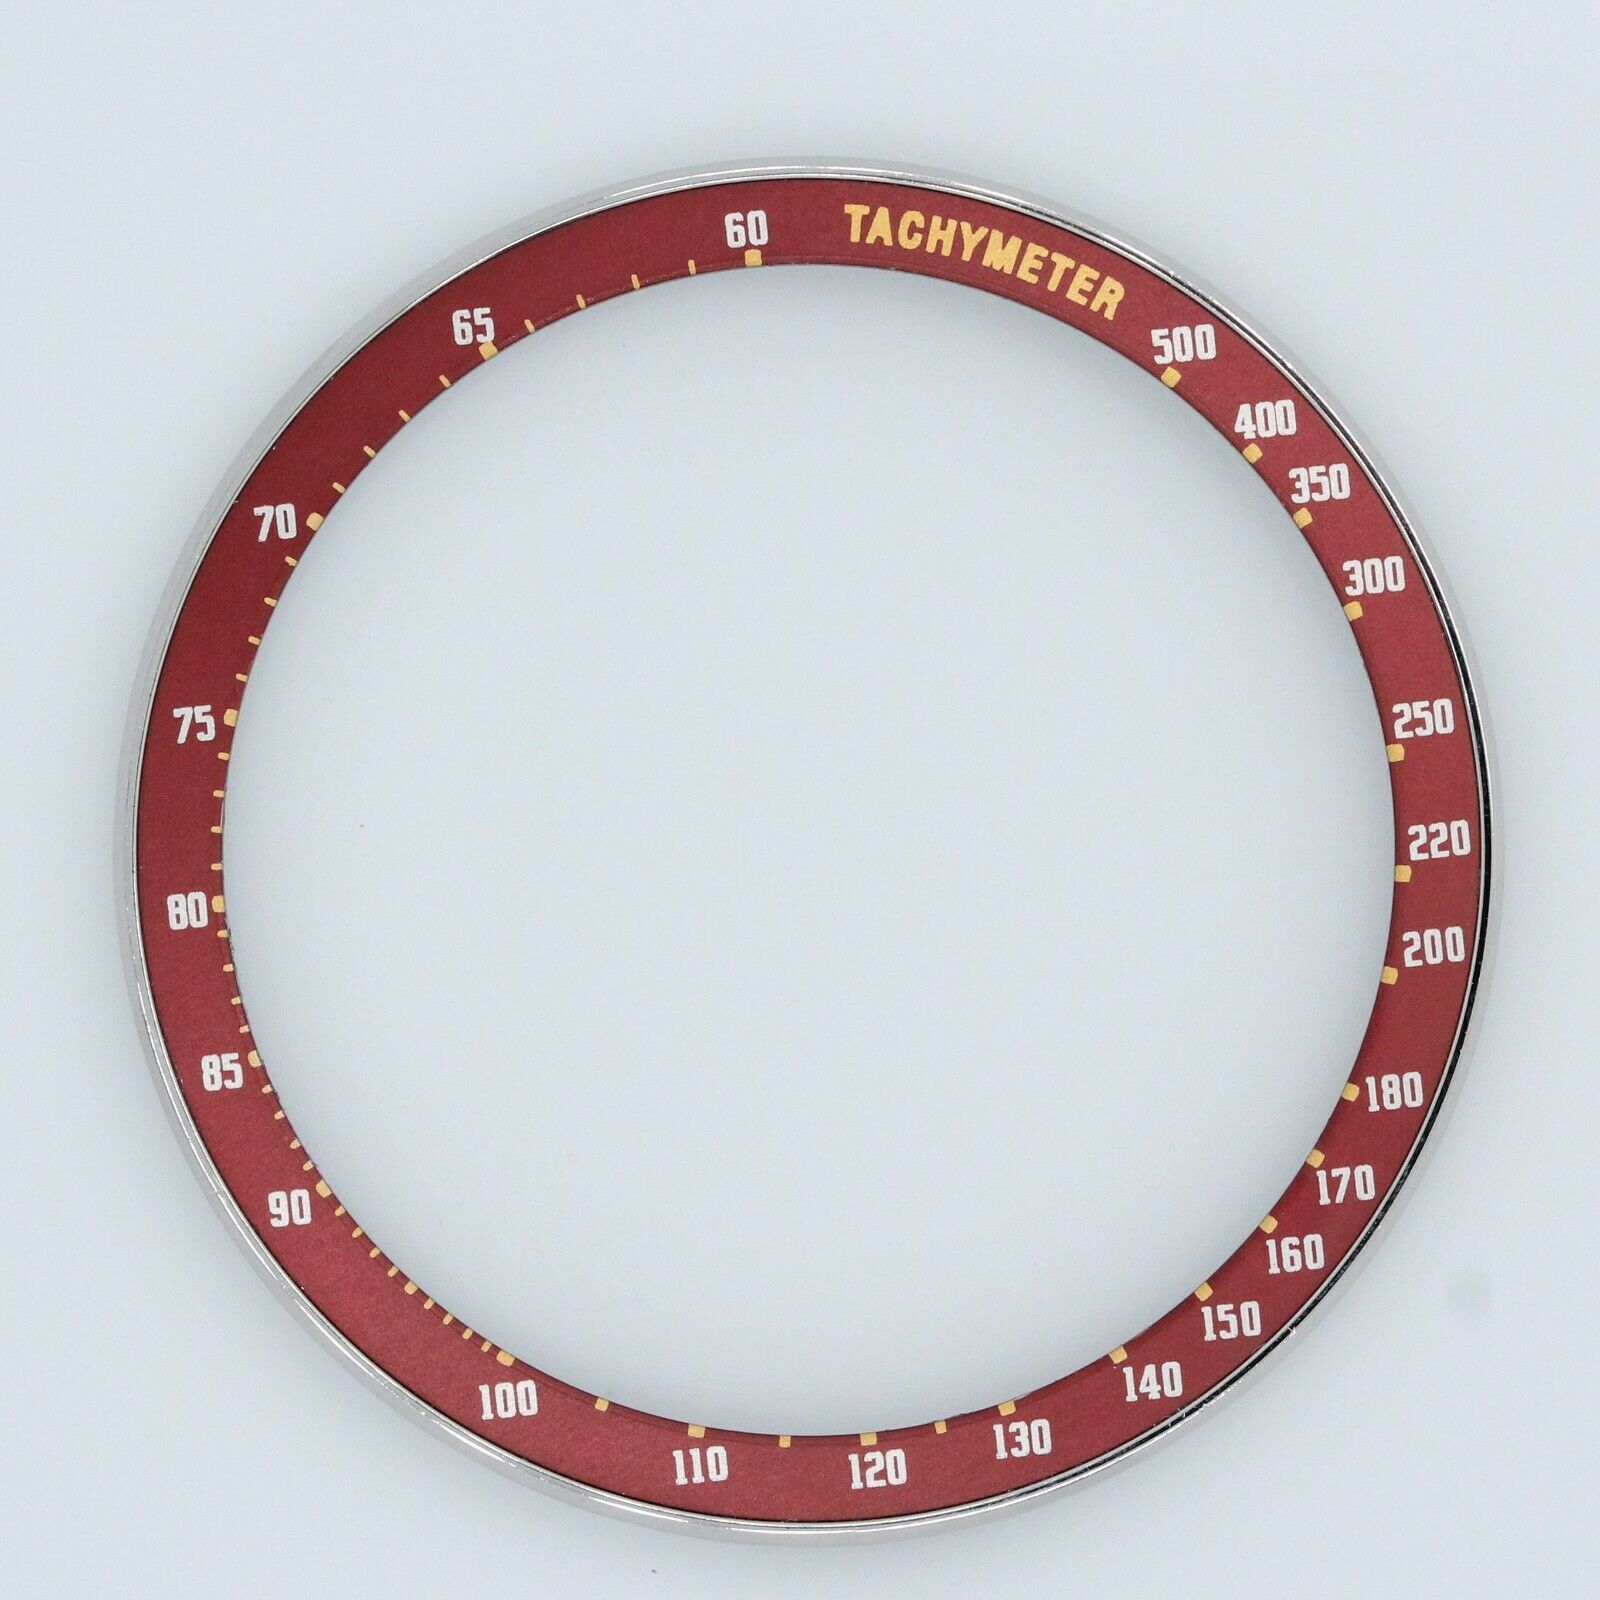 Bezel / Insert / Rotating Indicator Ring – A parts